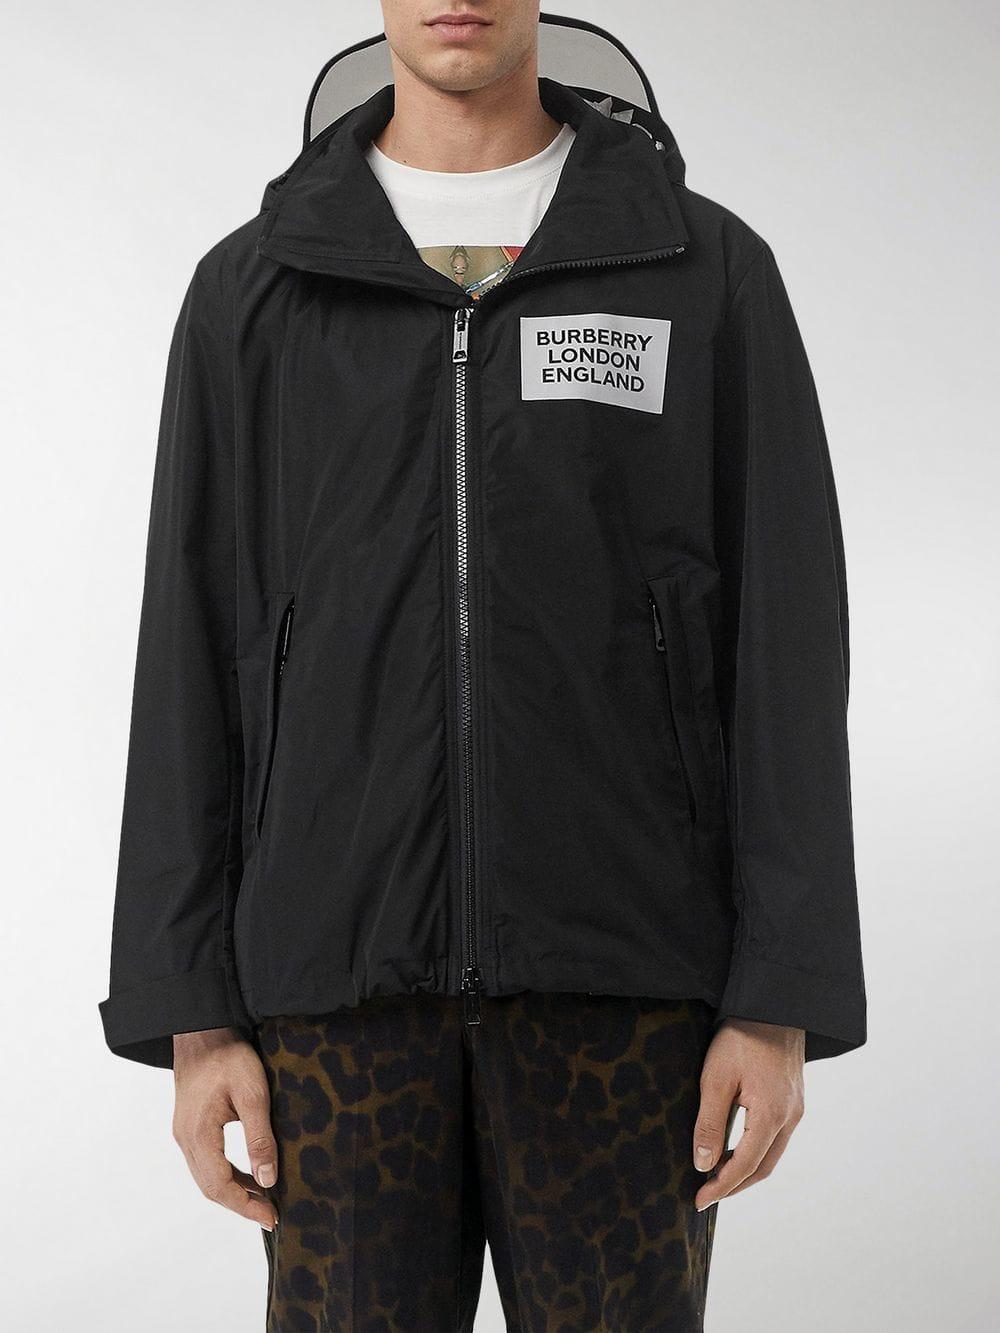 Burberry Synthetic Detachable Hood Taffeta Jacket in Black for Men - Lyst